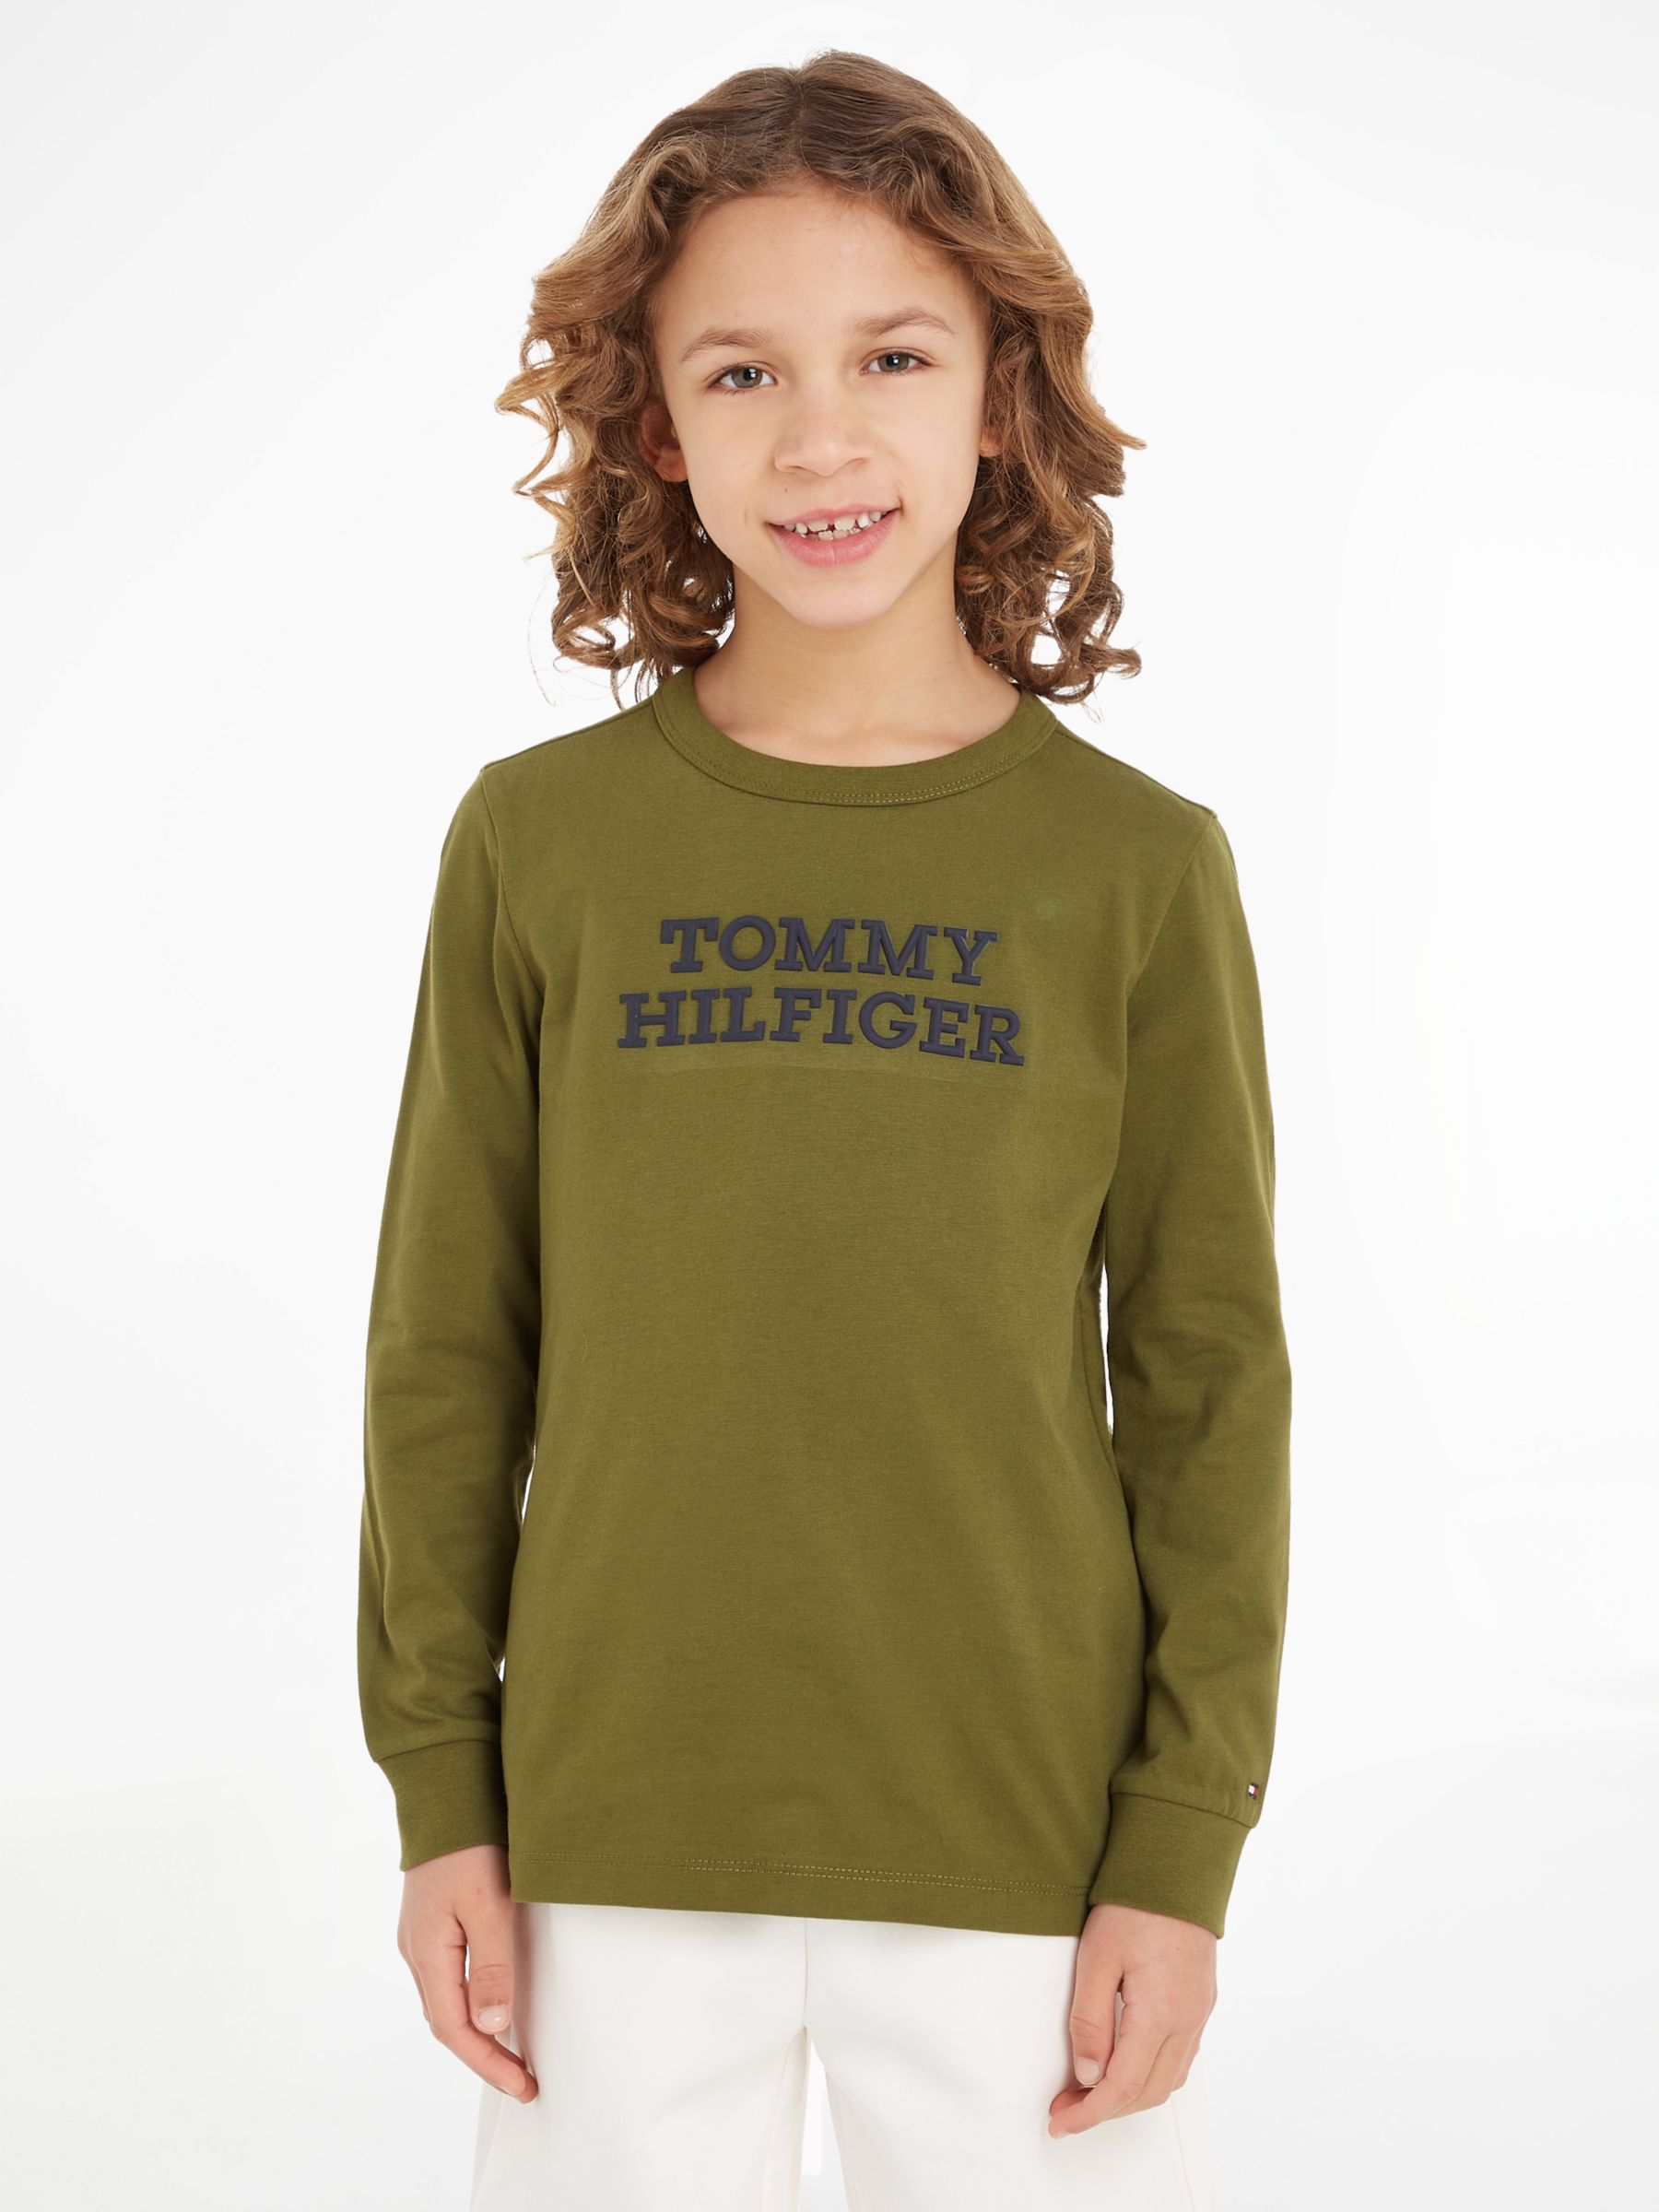 Tommy Hilfiger Kids\' Raised Green, 3 Sleeve T-Shirt, Logo years Putting Long